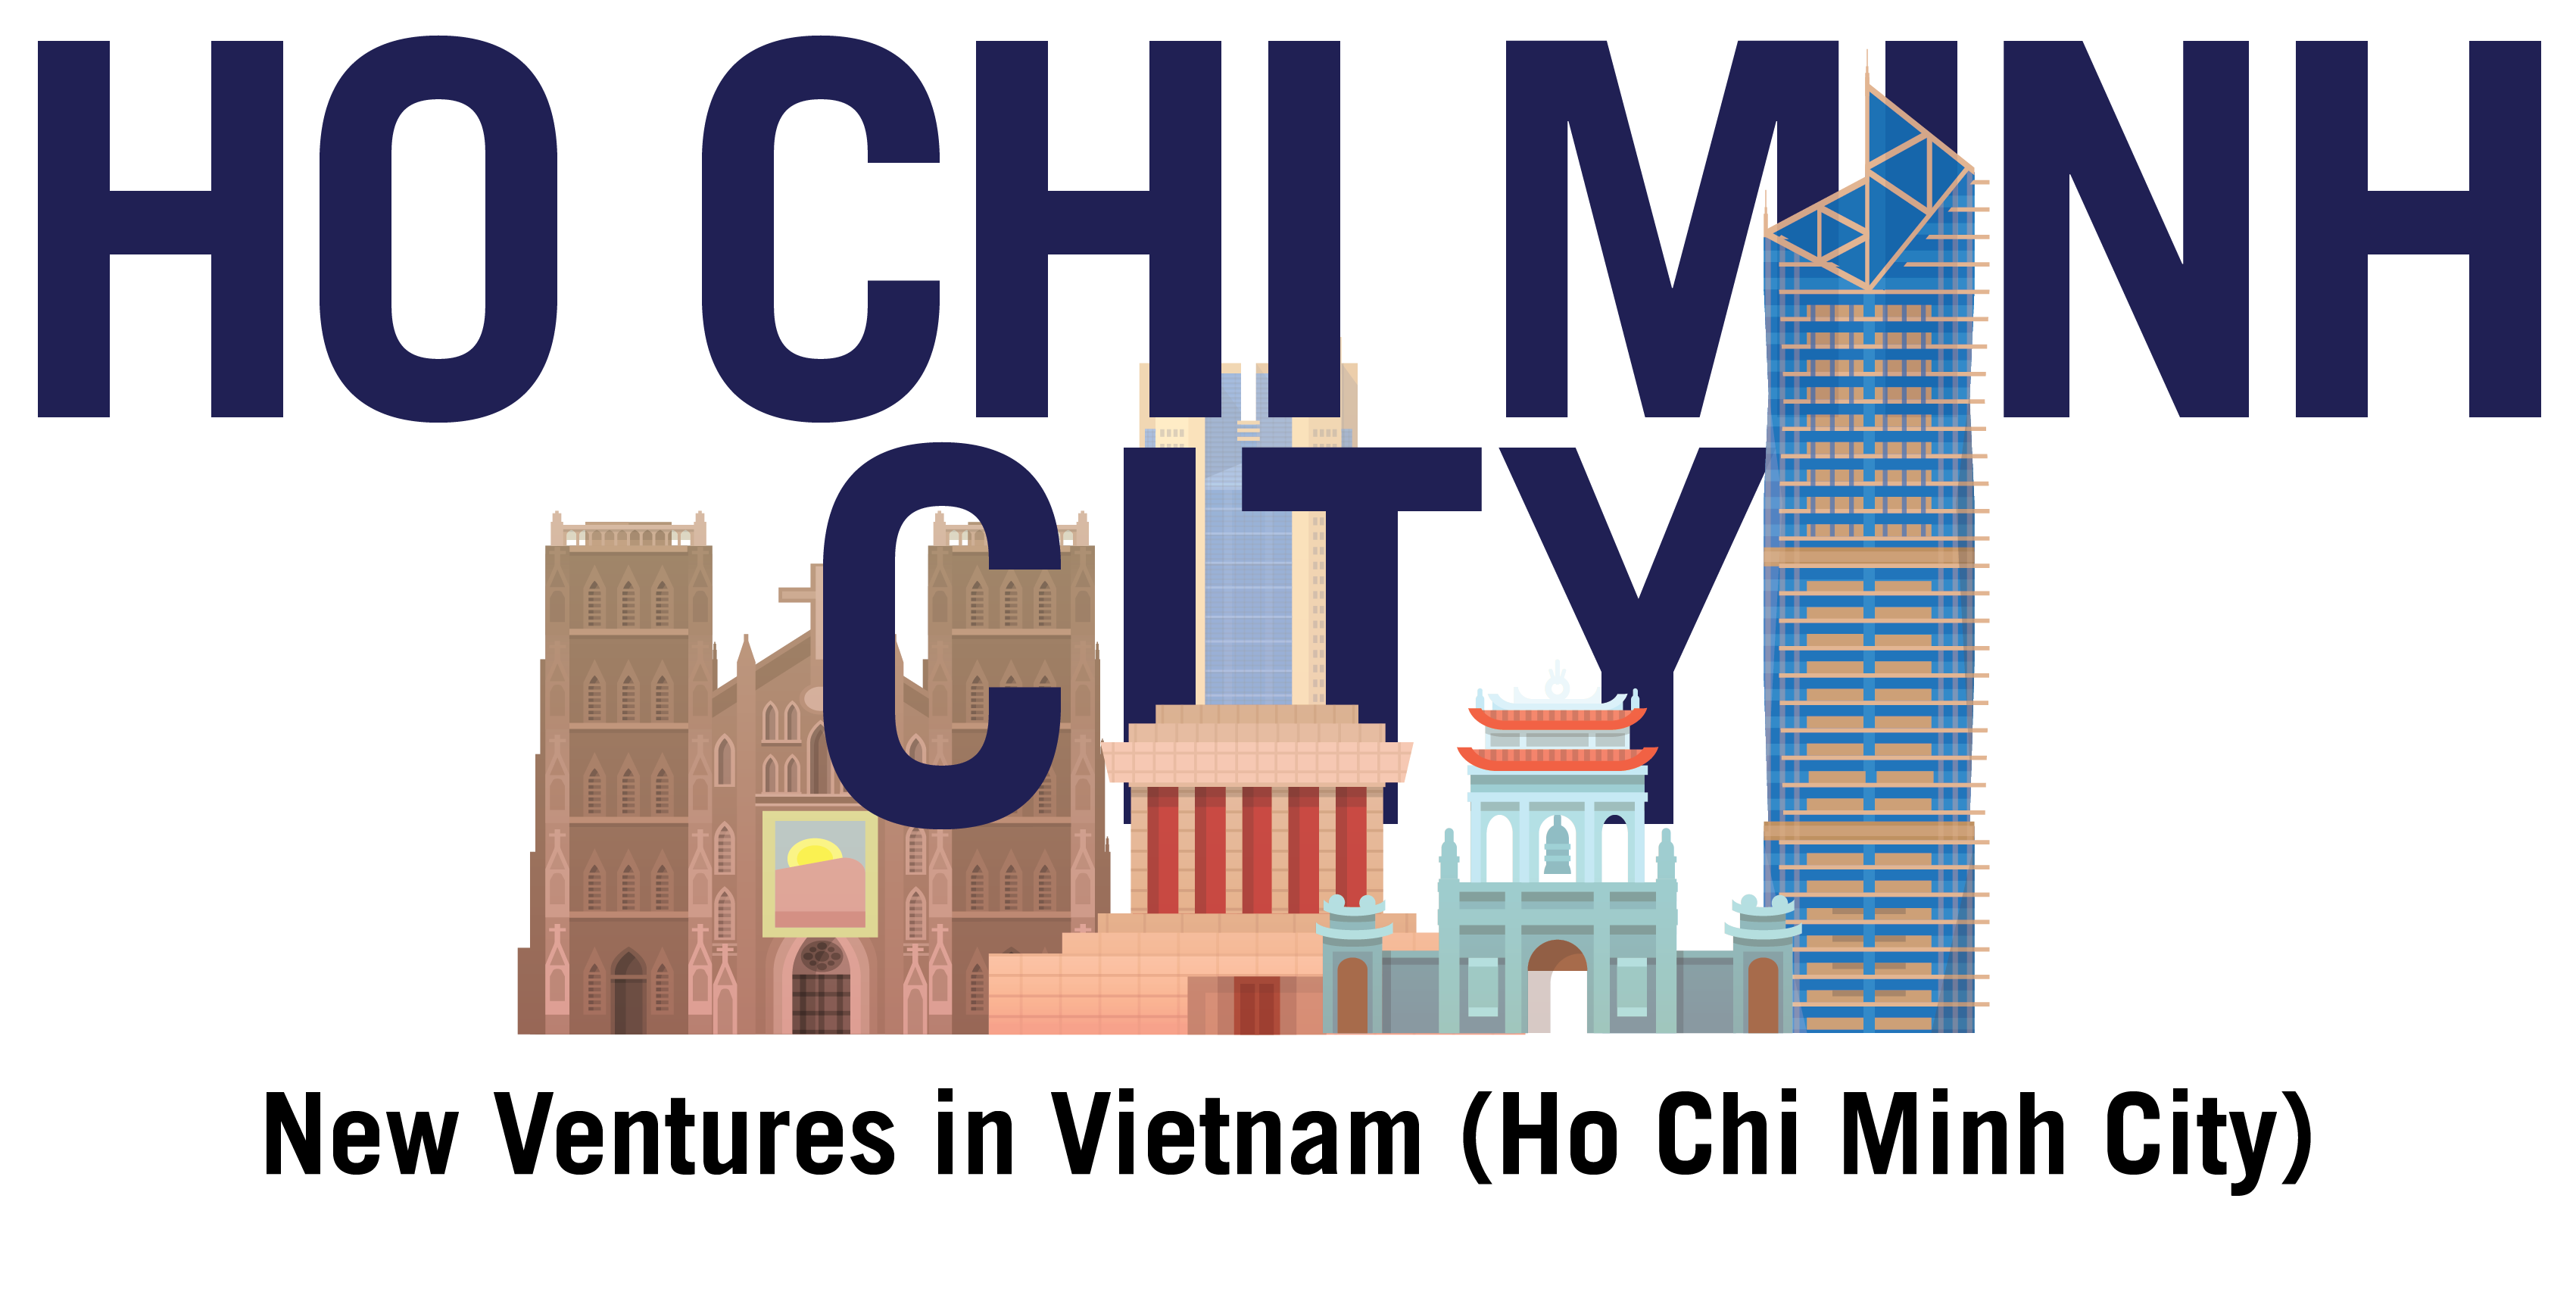 New Ventures in Vietnam (Ho Chi Minh City